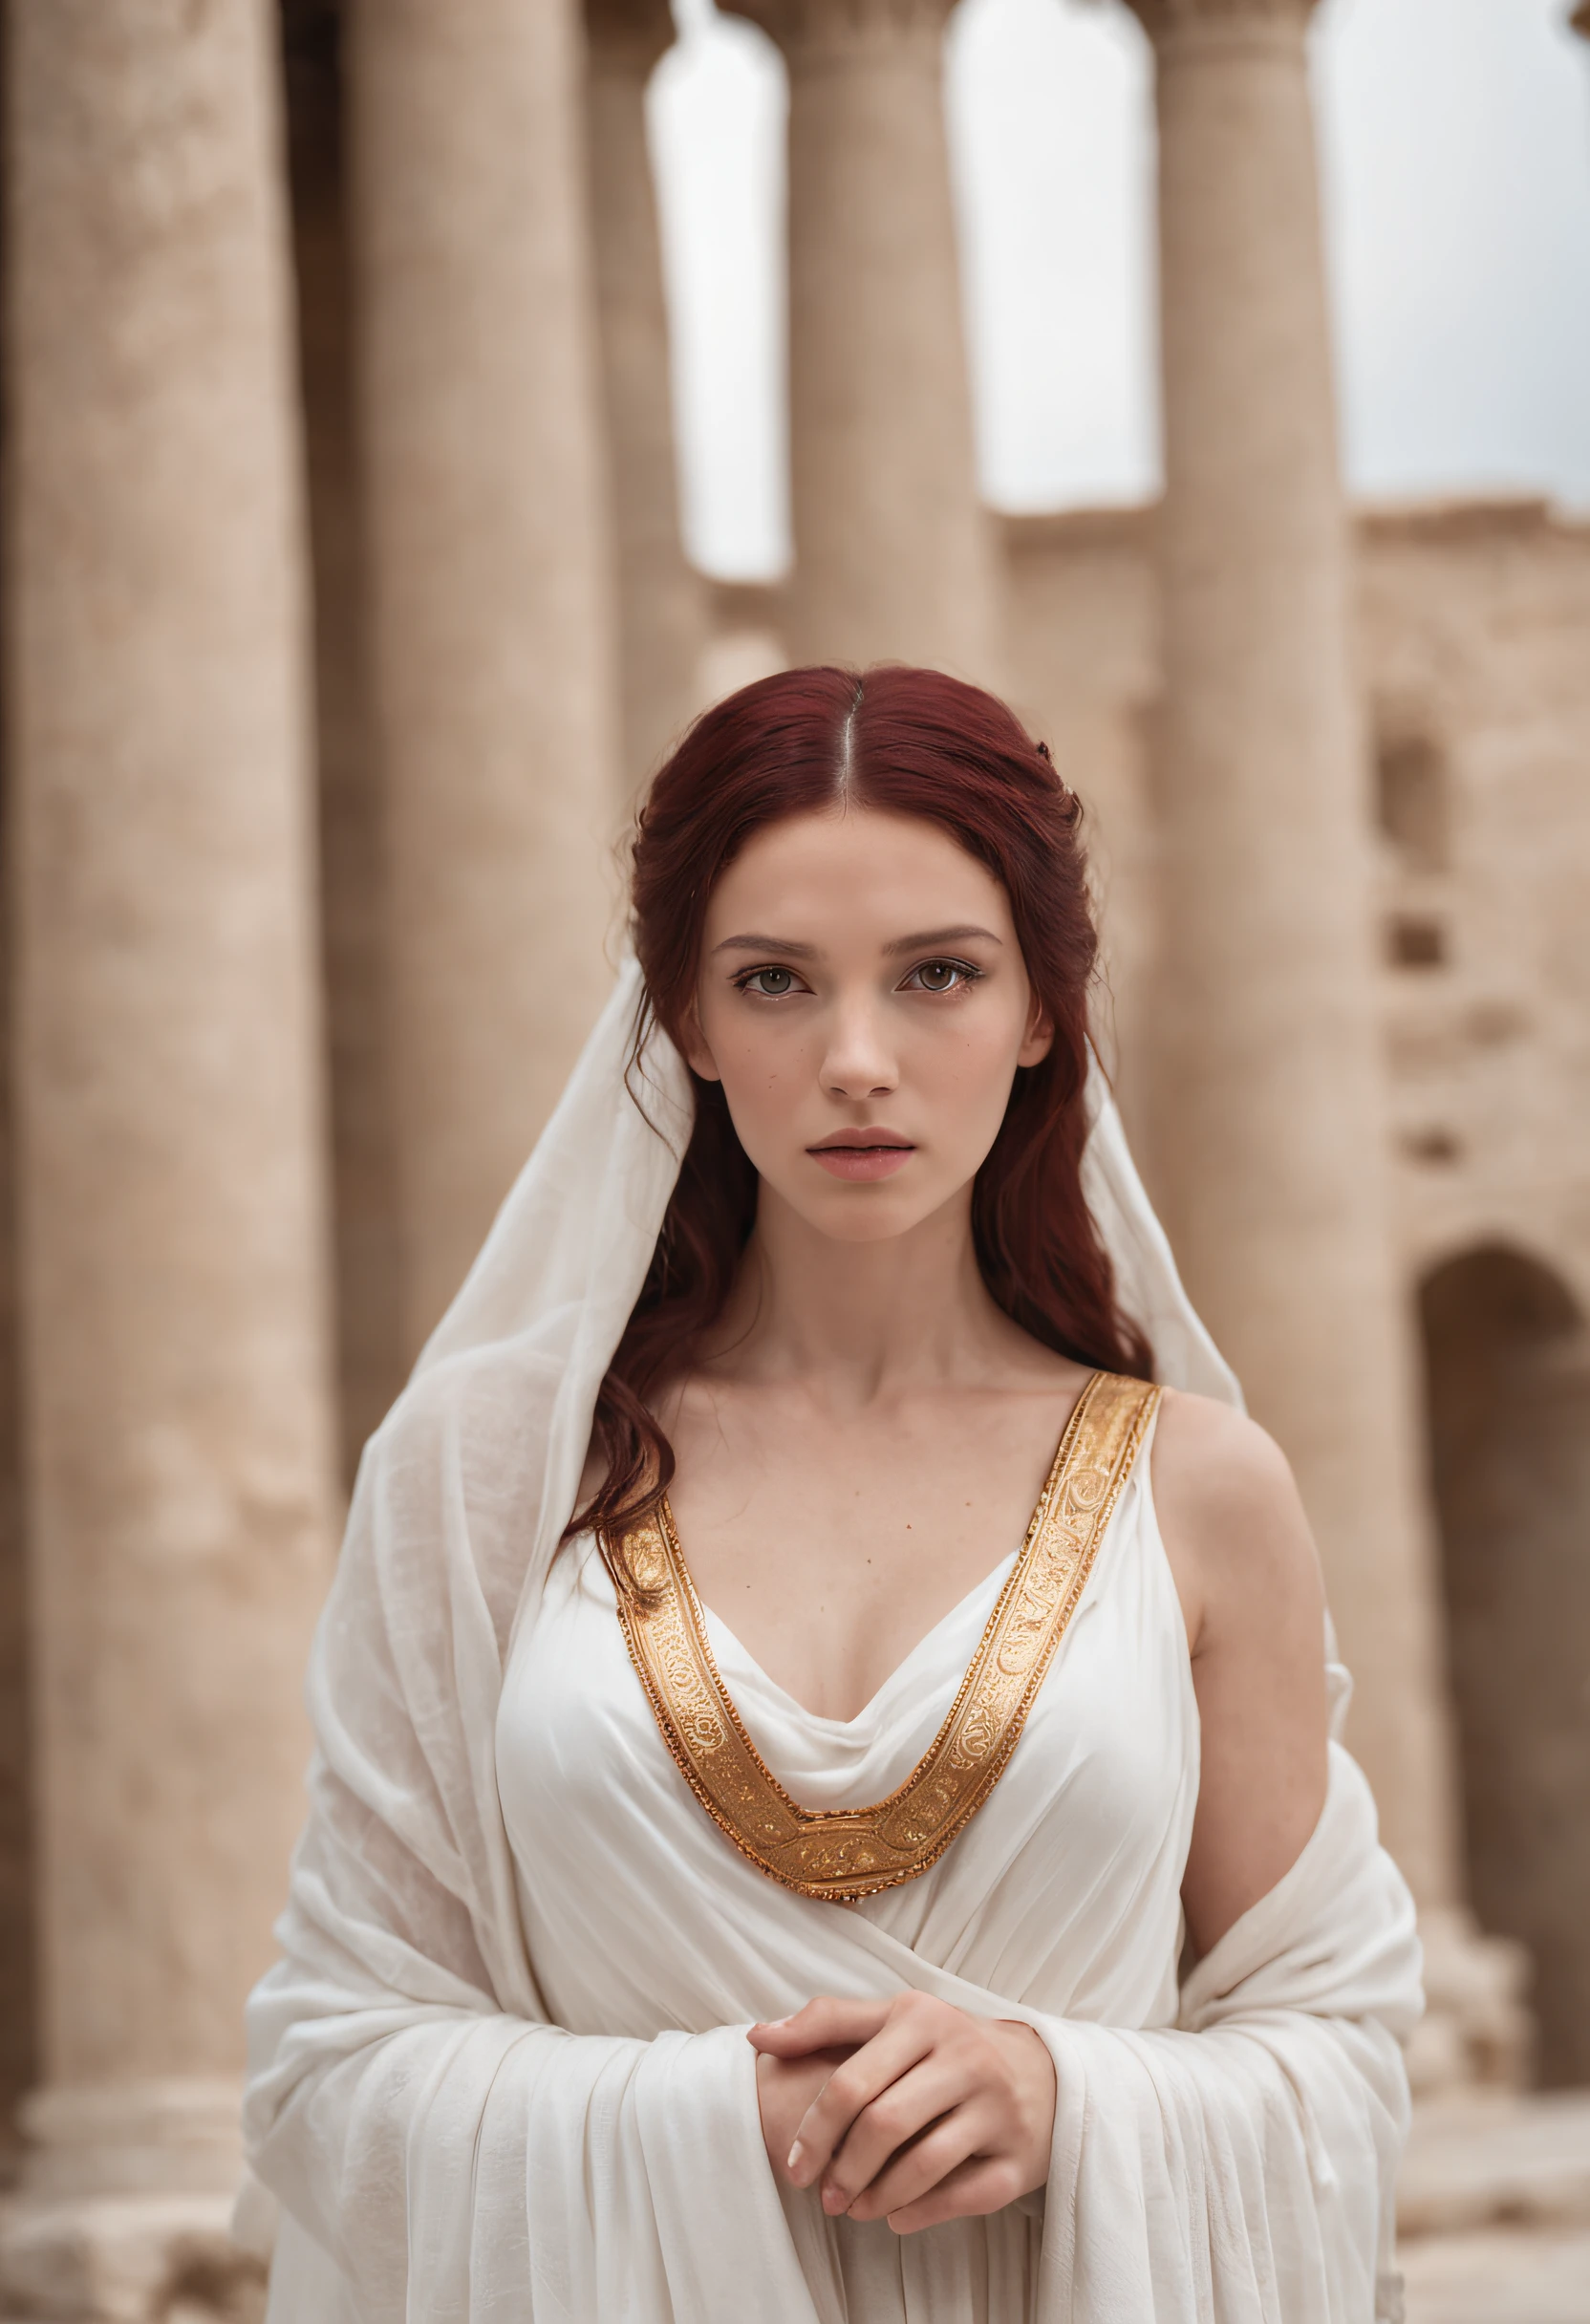 Greek goddess of hearth 그리고 fire, ~와 함께 ((검붉은 머리)) 그리고 ((검붉은 눈)), 피부가 희다, wears a long white greek toga 그리고 a white veil, looks mysterious 그리고 beautiful, 고대 그리스 사원 내부, "베스타의 신성한 불", 그리스 신화, 신성한 분위기, 사실적인, 슈퍼 고품질, 슈퍼 디테일, ultra accurate description of h그리고s, 걸작, 8K, HDR